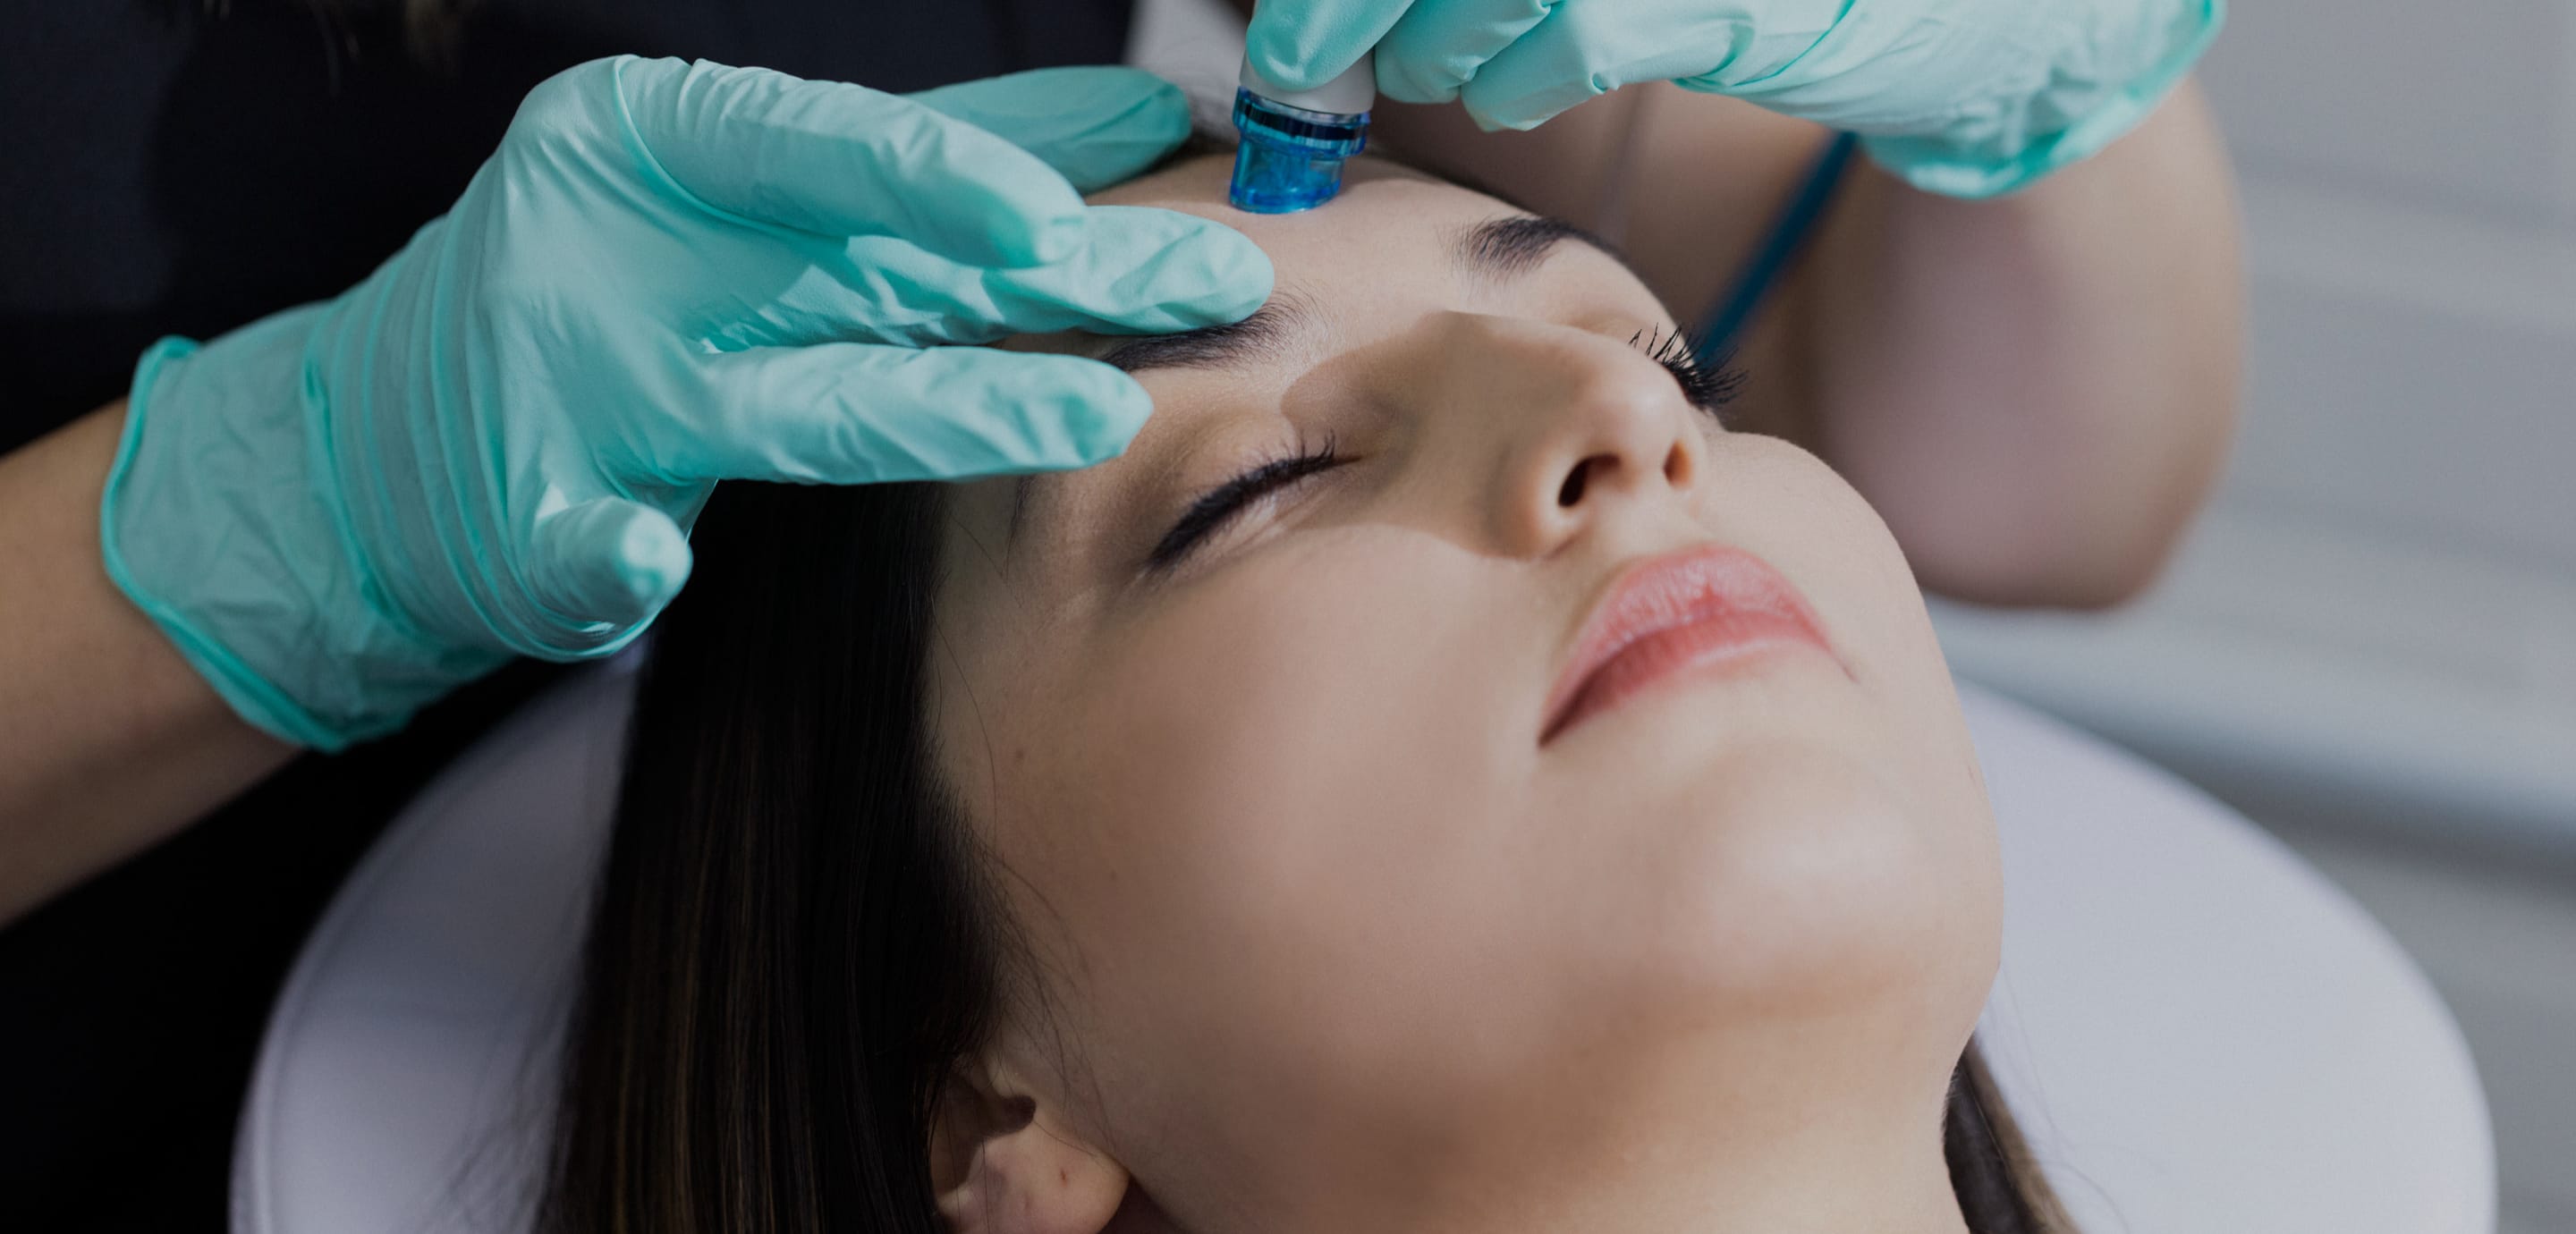 ZL Medspa Blog | Understanding Facial Laser Treatments: How Do They Work?